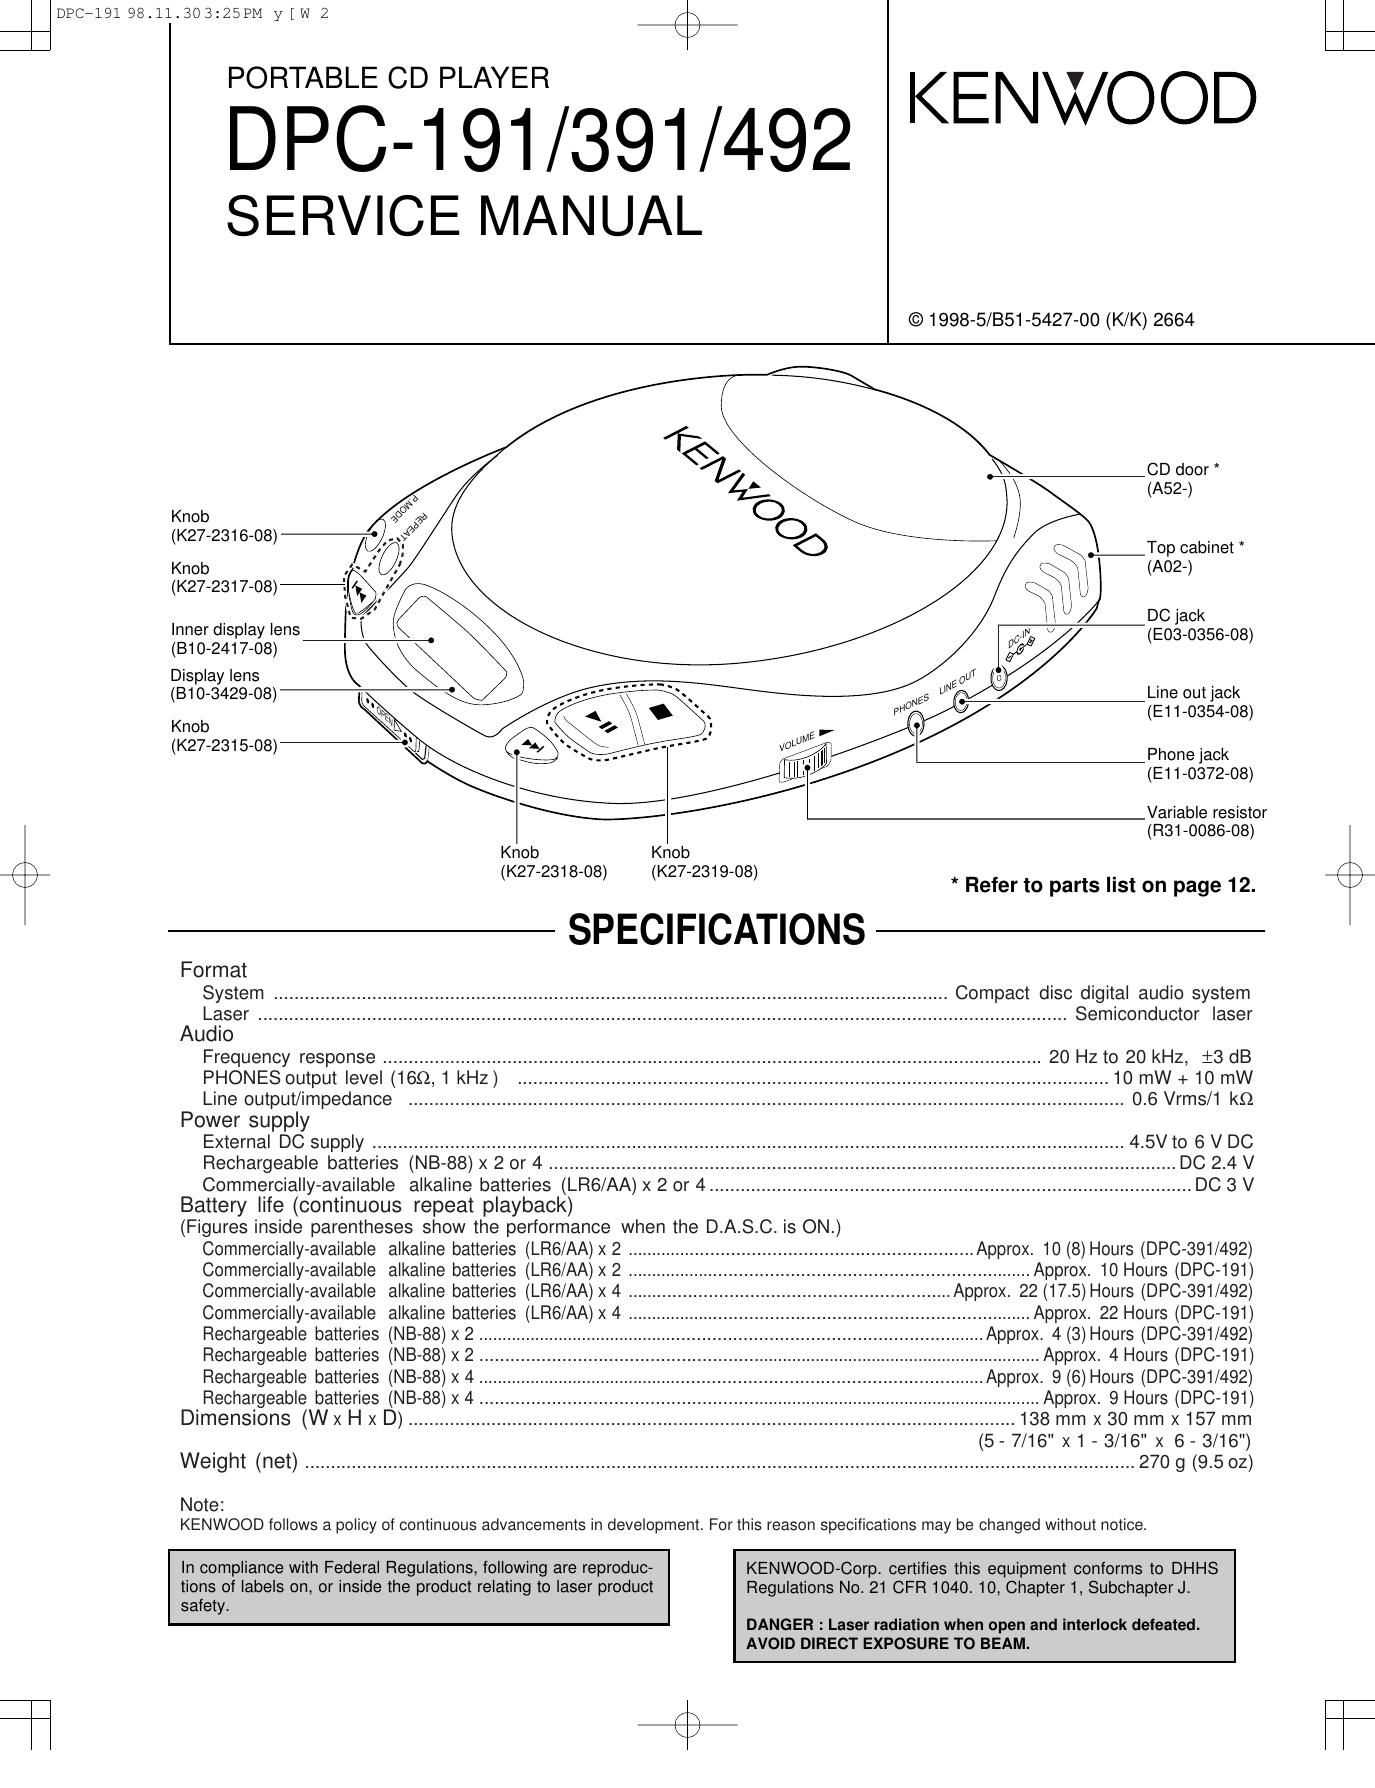 Kenwood DPC 391 Service Manual